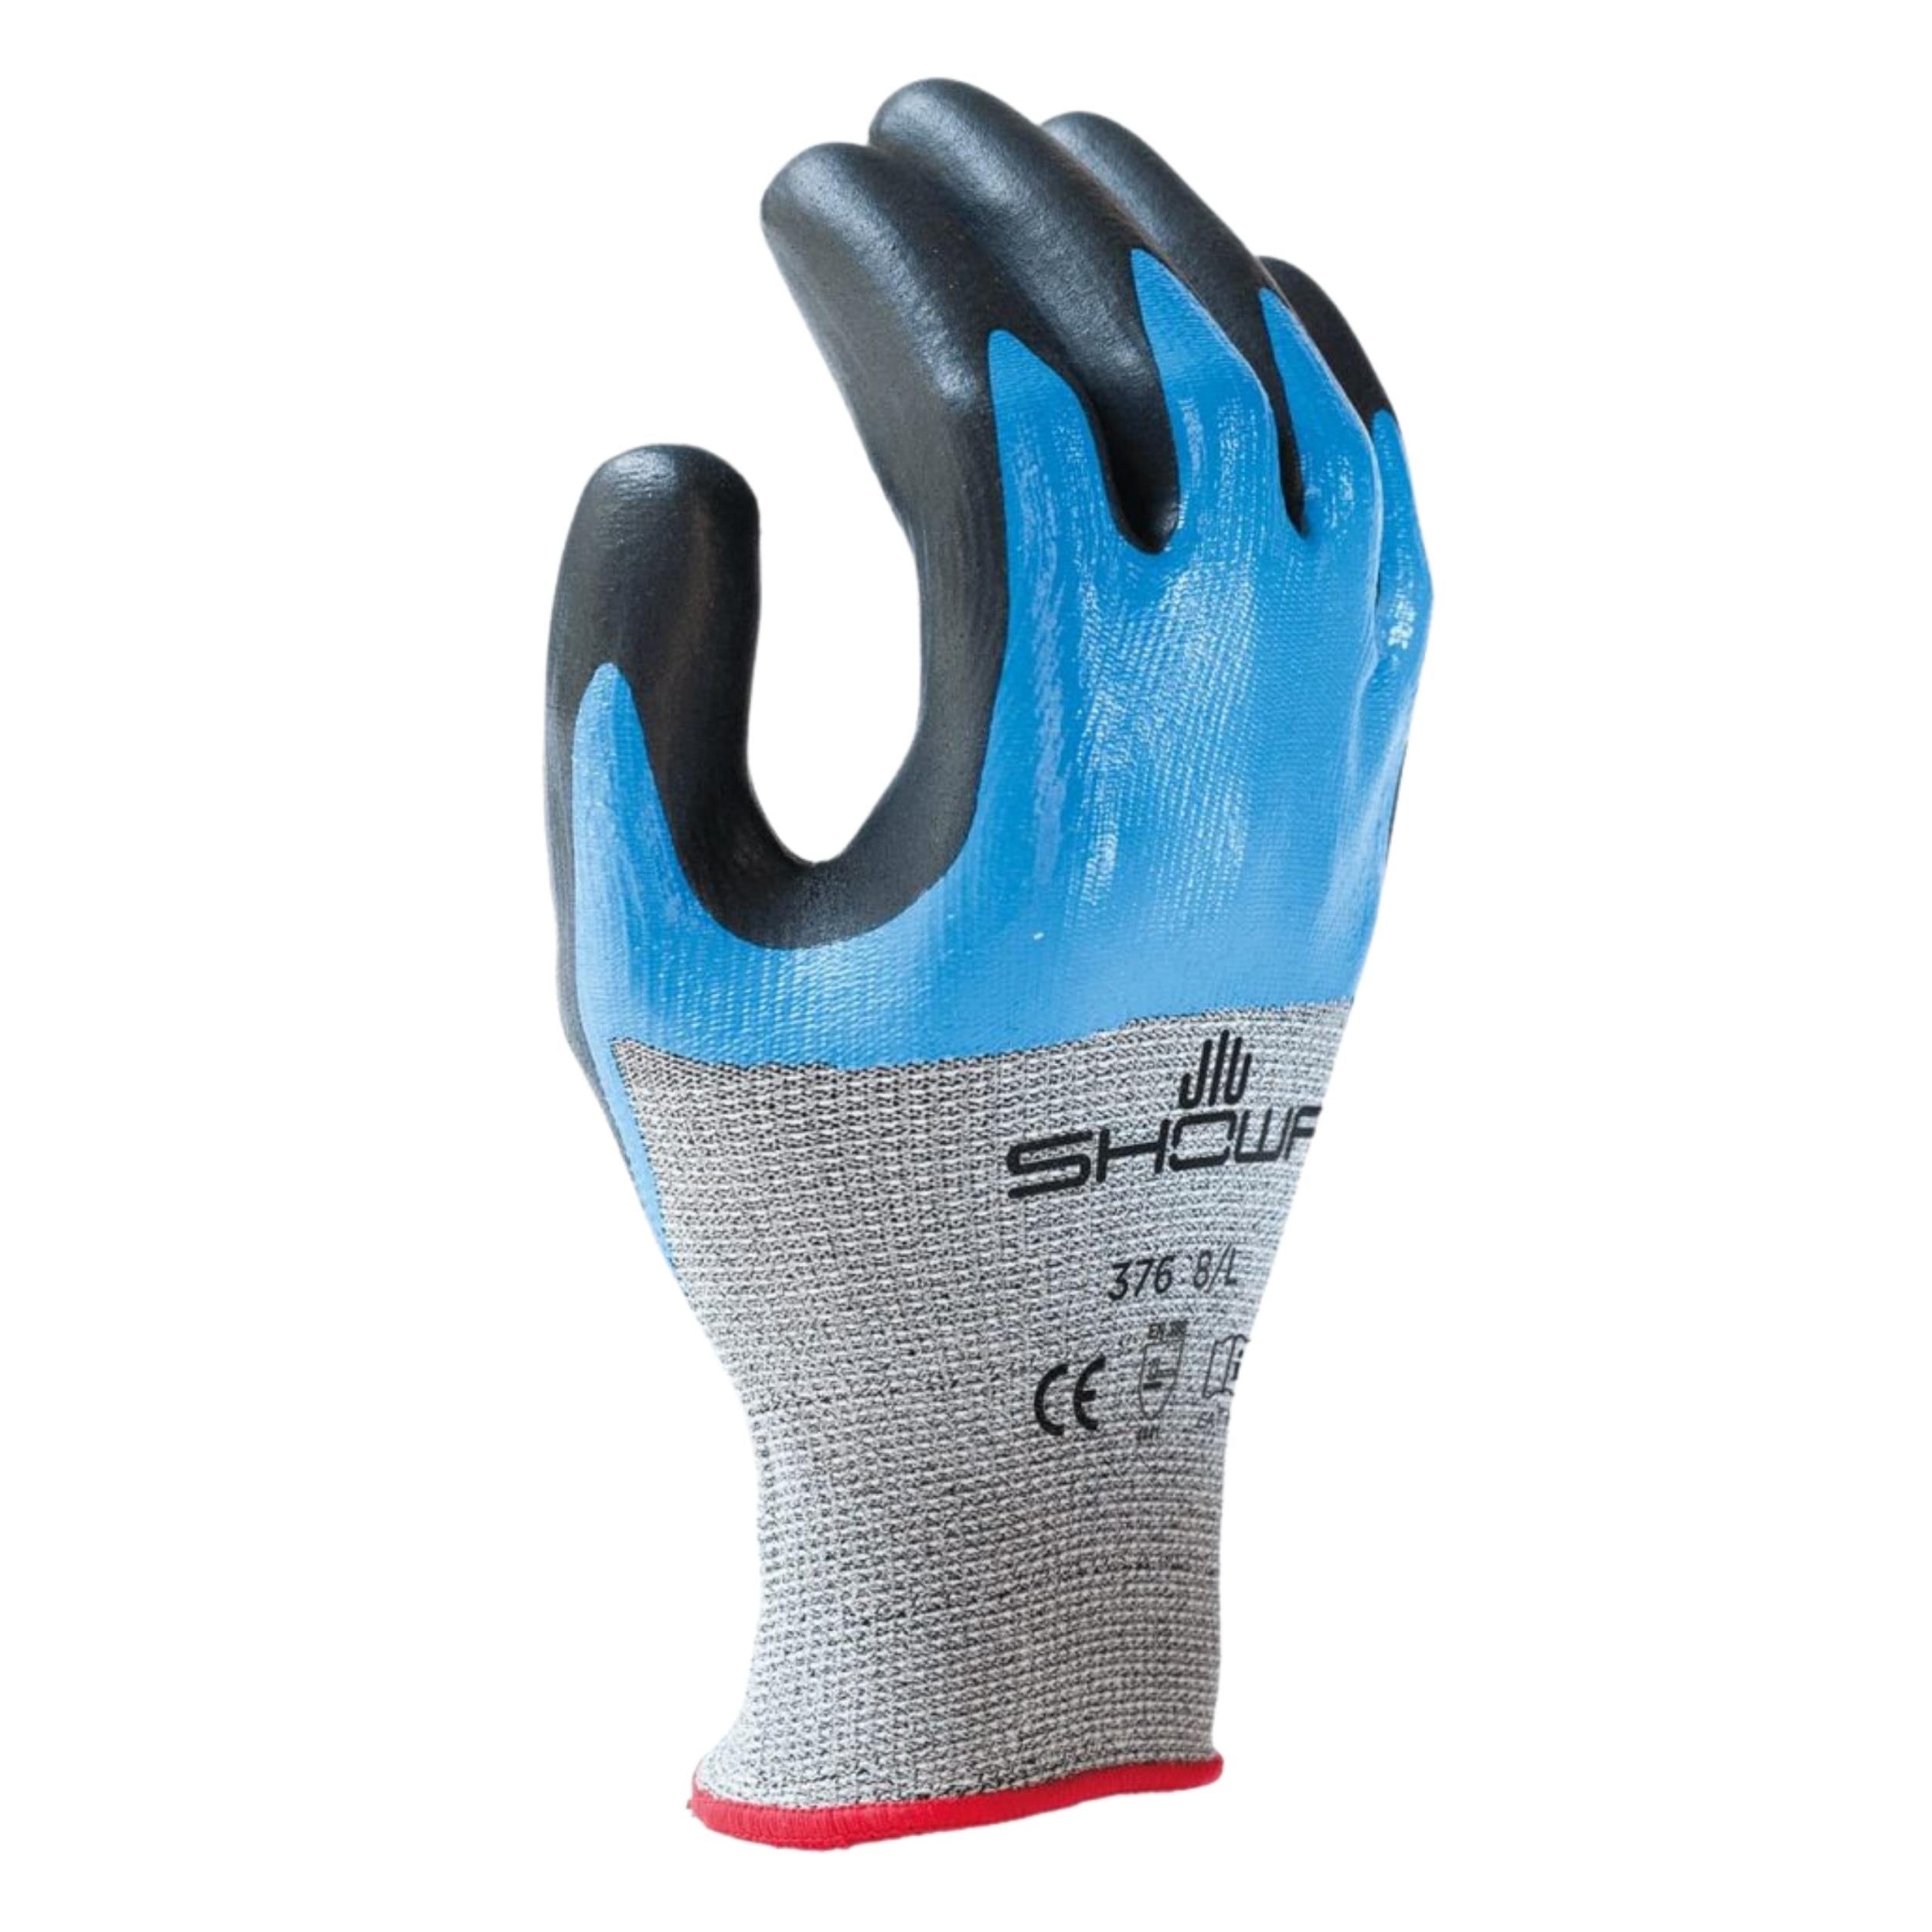 SHOWA 376 Liquid- resistant: General-purpose Gloves 3 Pack